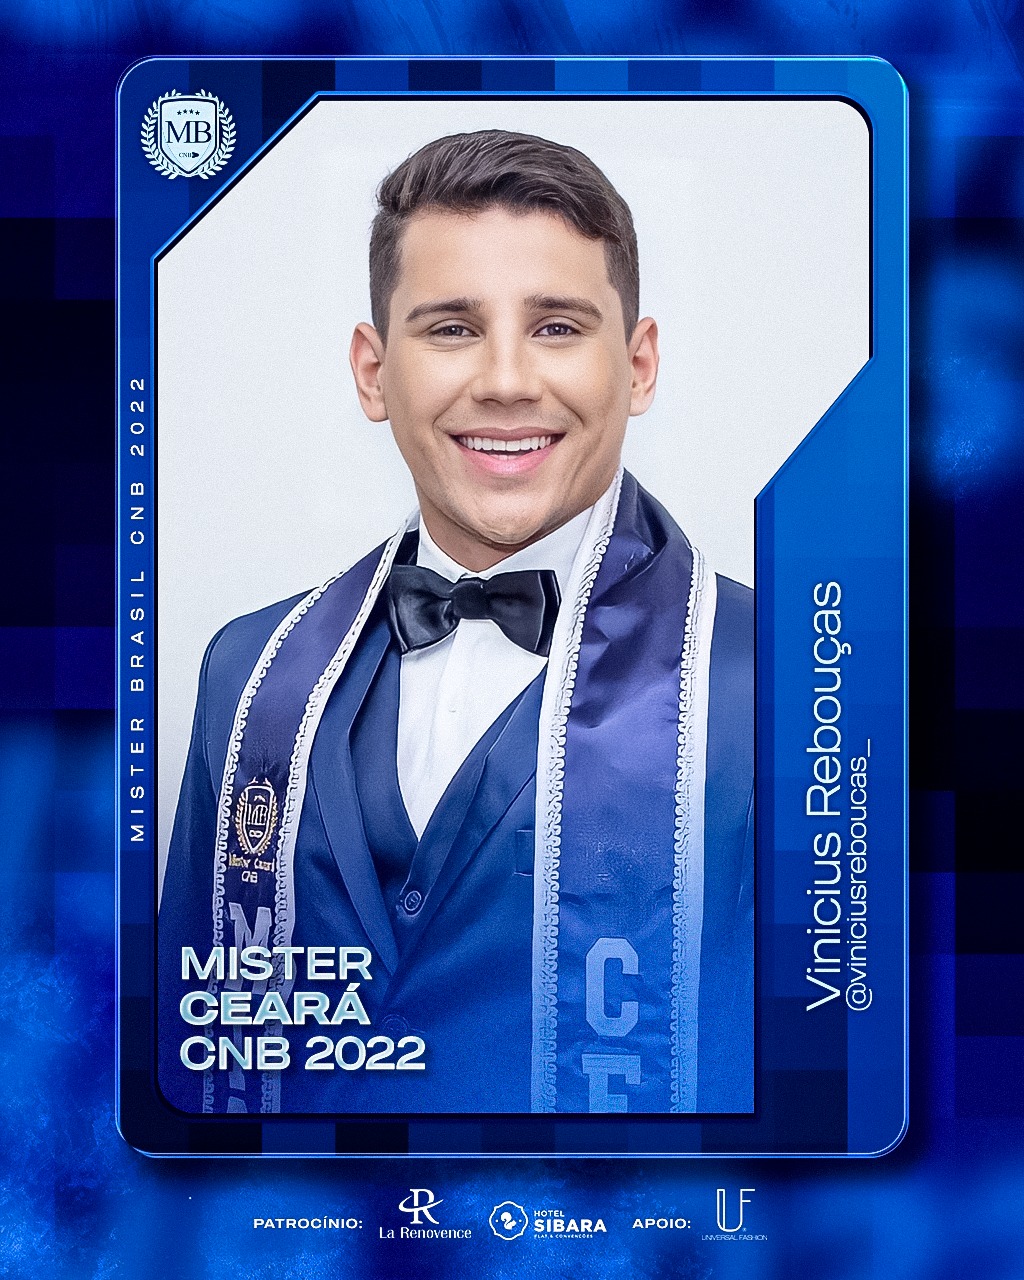 Mister Brasil CNB 2022 is Mister Caminhos do Contestado - Page 2 27917511